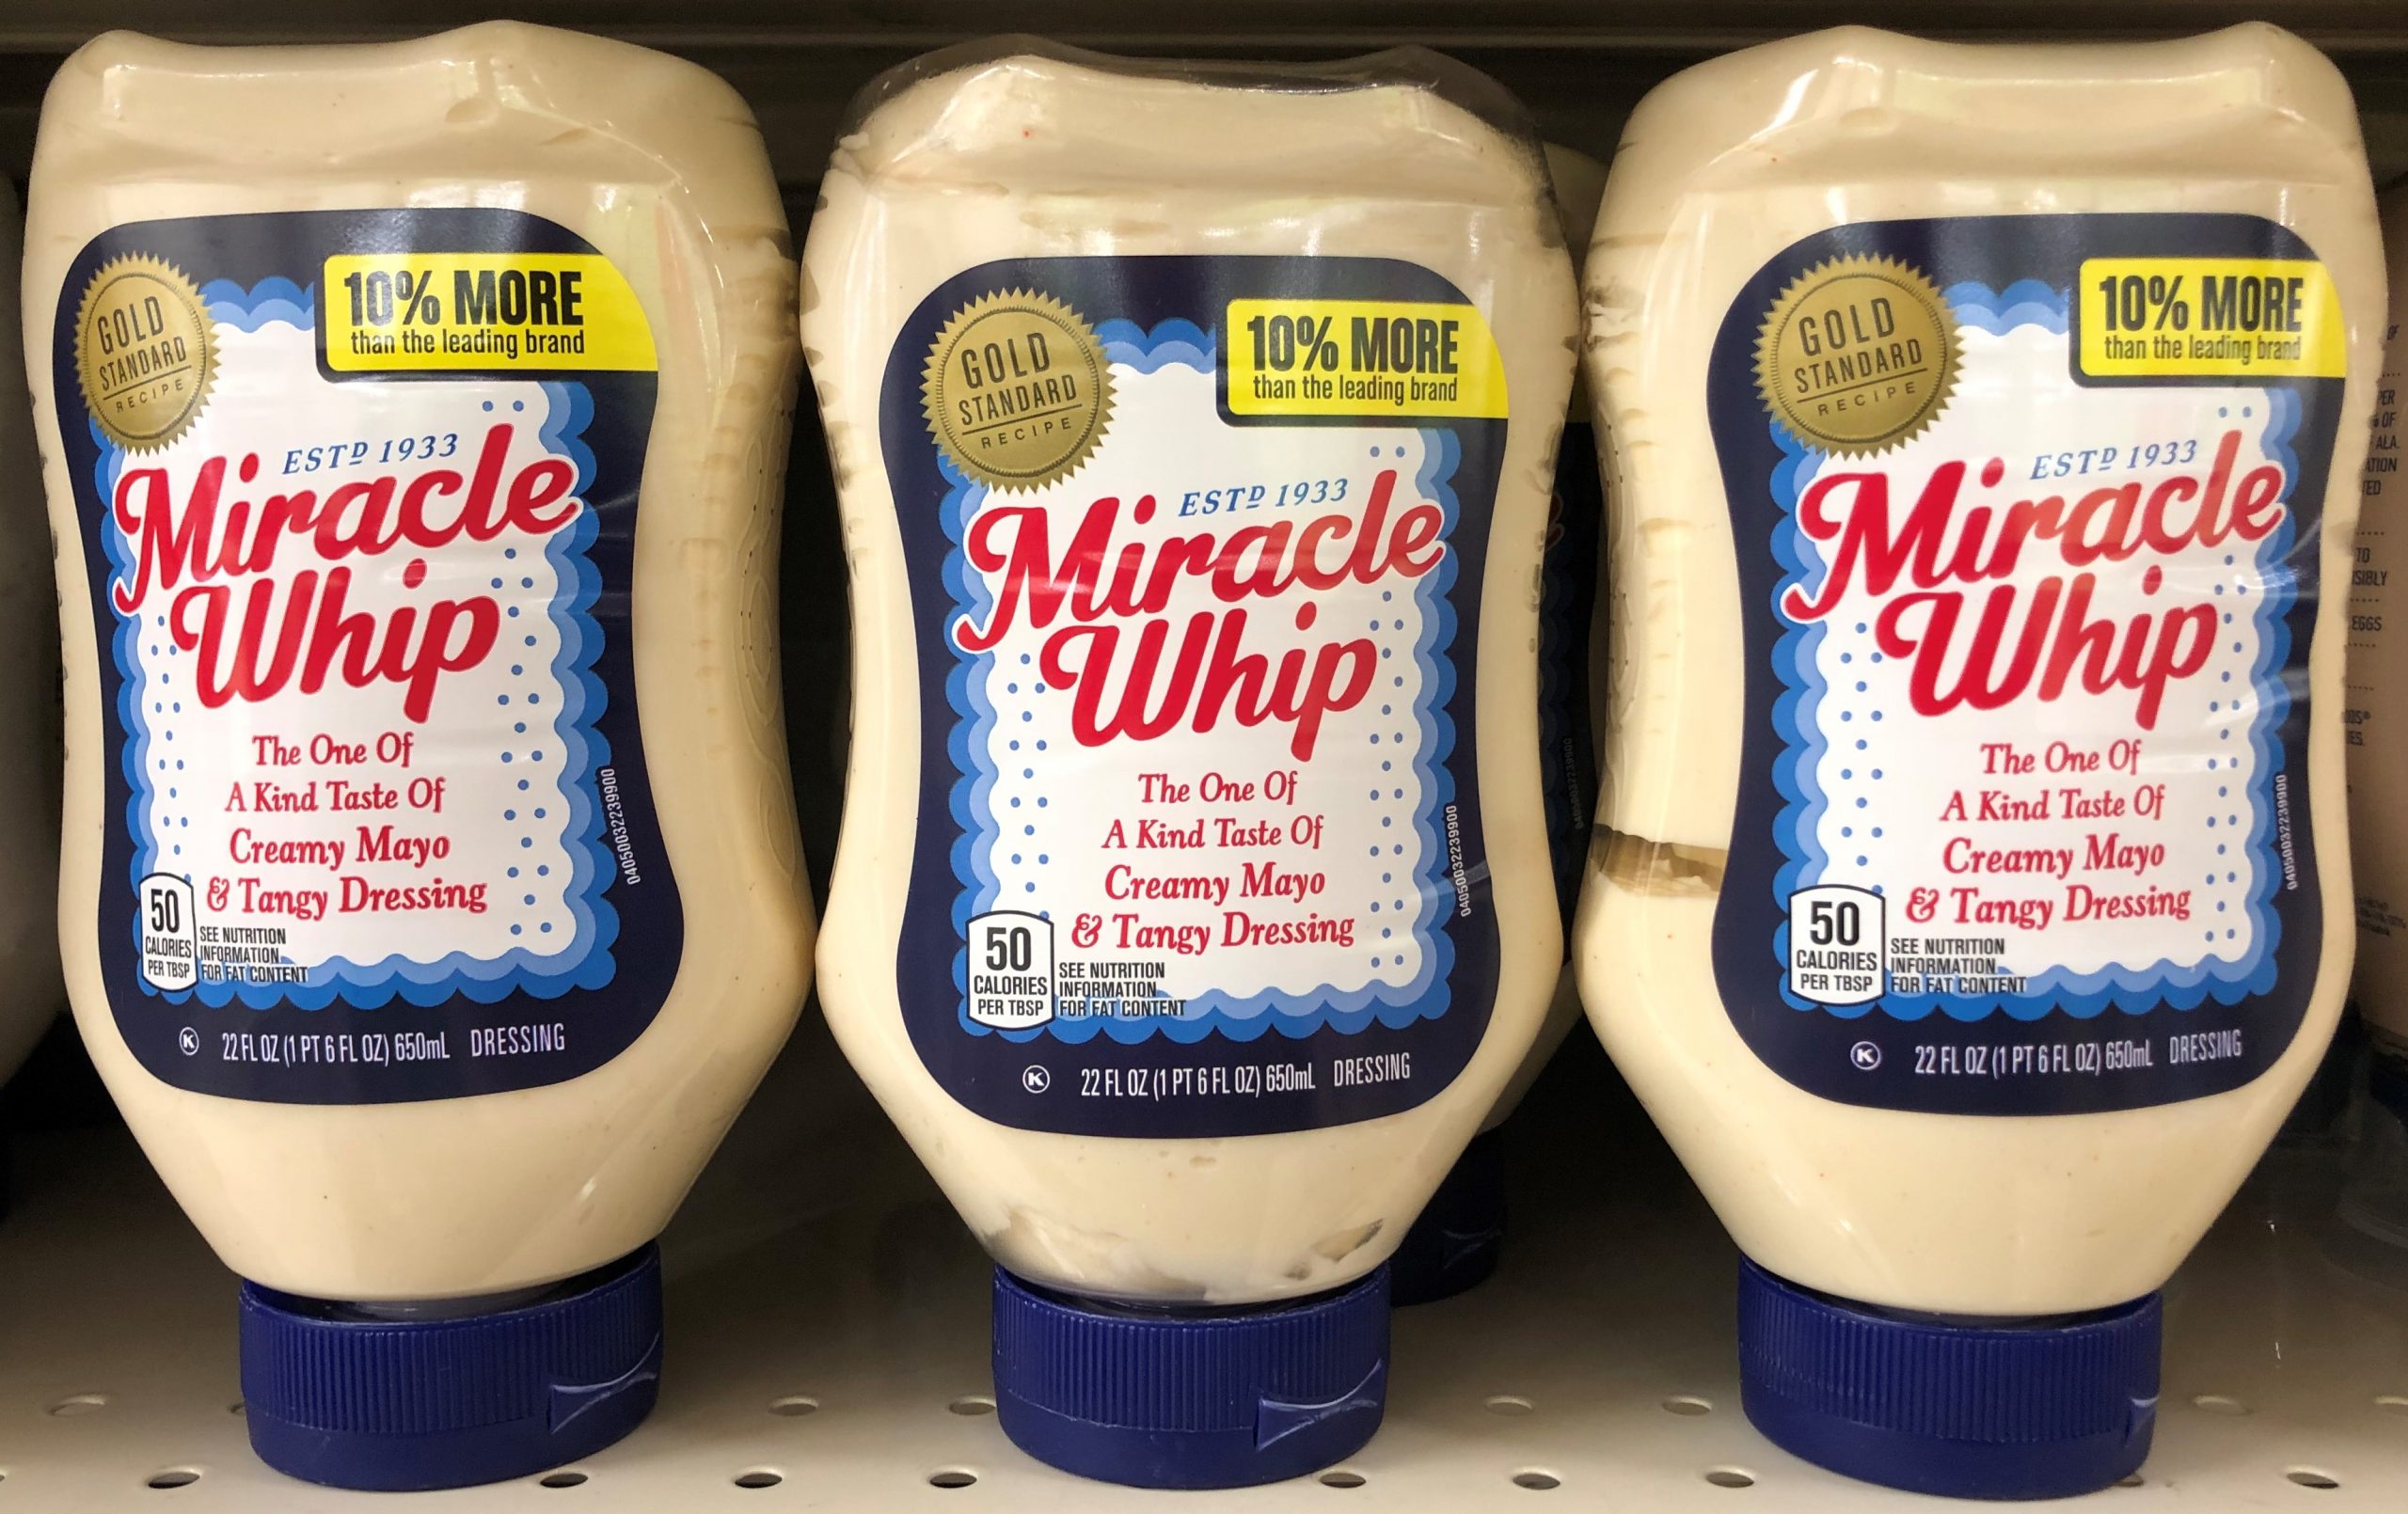 Kraft Miracle Whip Original Dressing - Shop Mayonnaise & Spreads